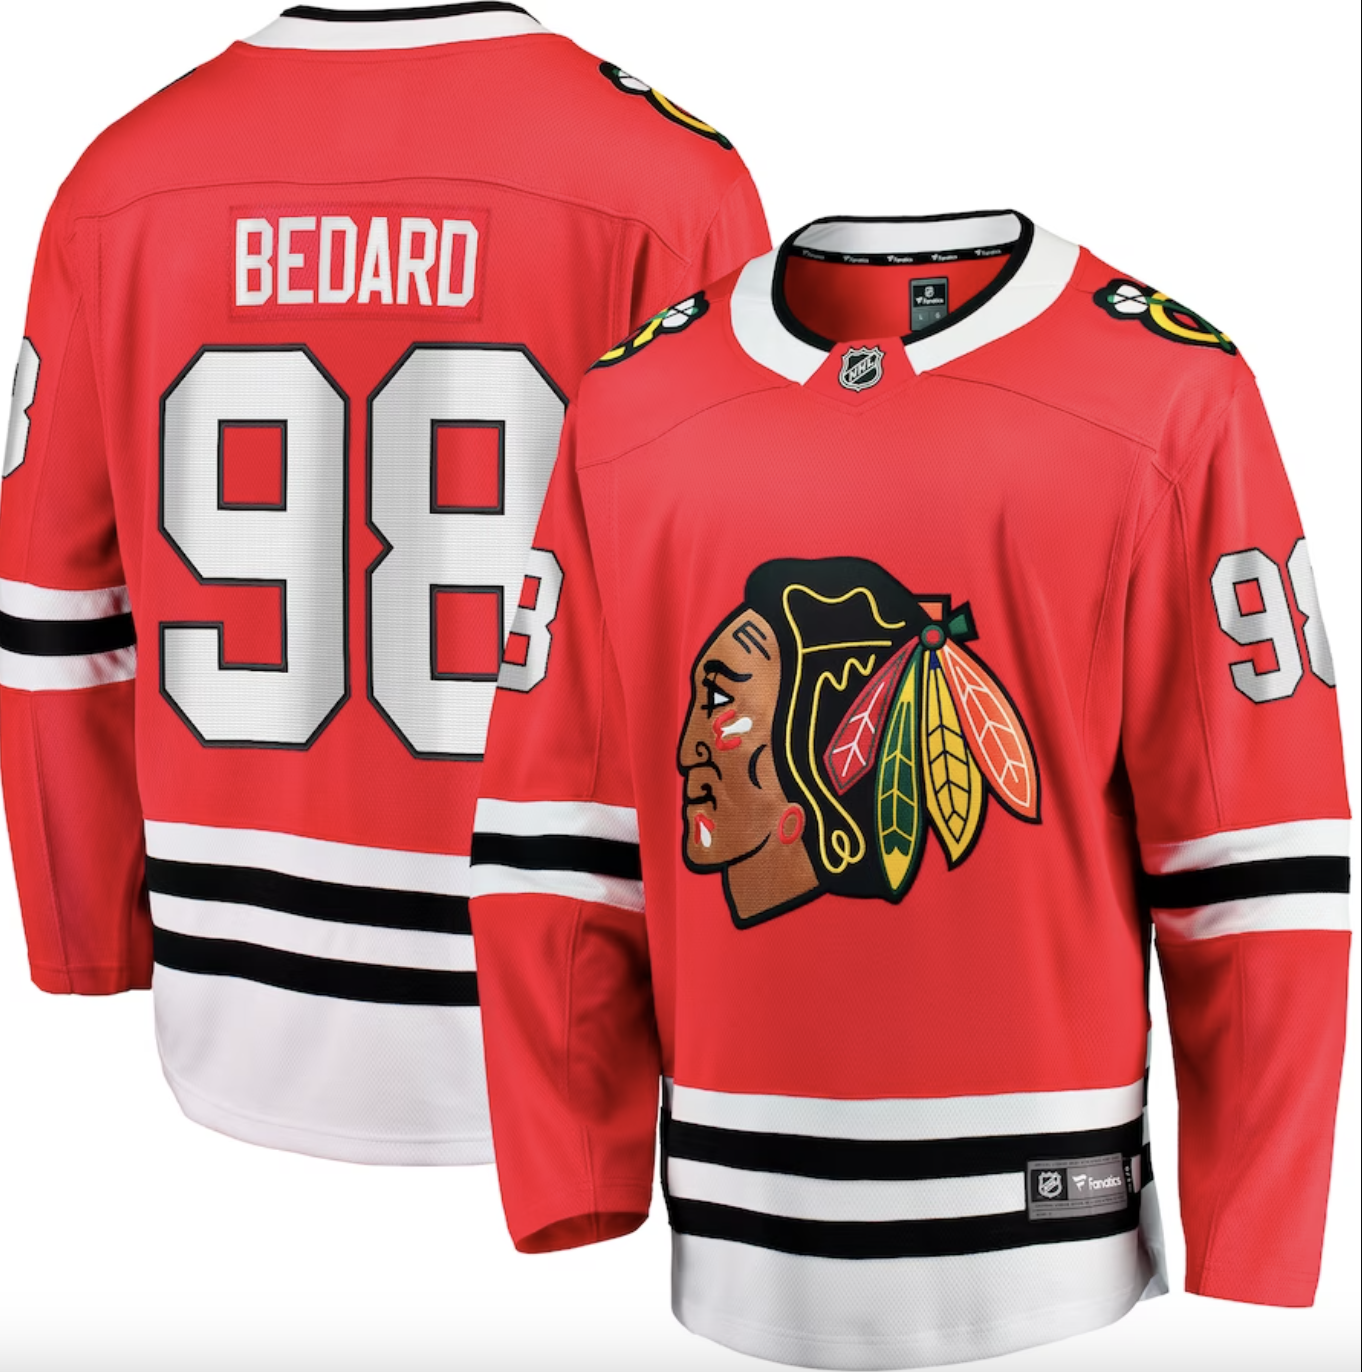 Connor Bedard Blackhawks jersey Where to buy online